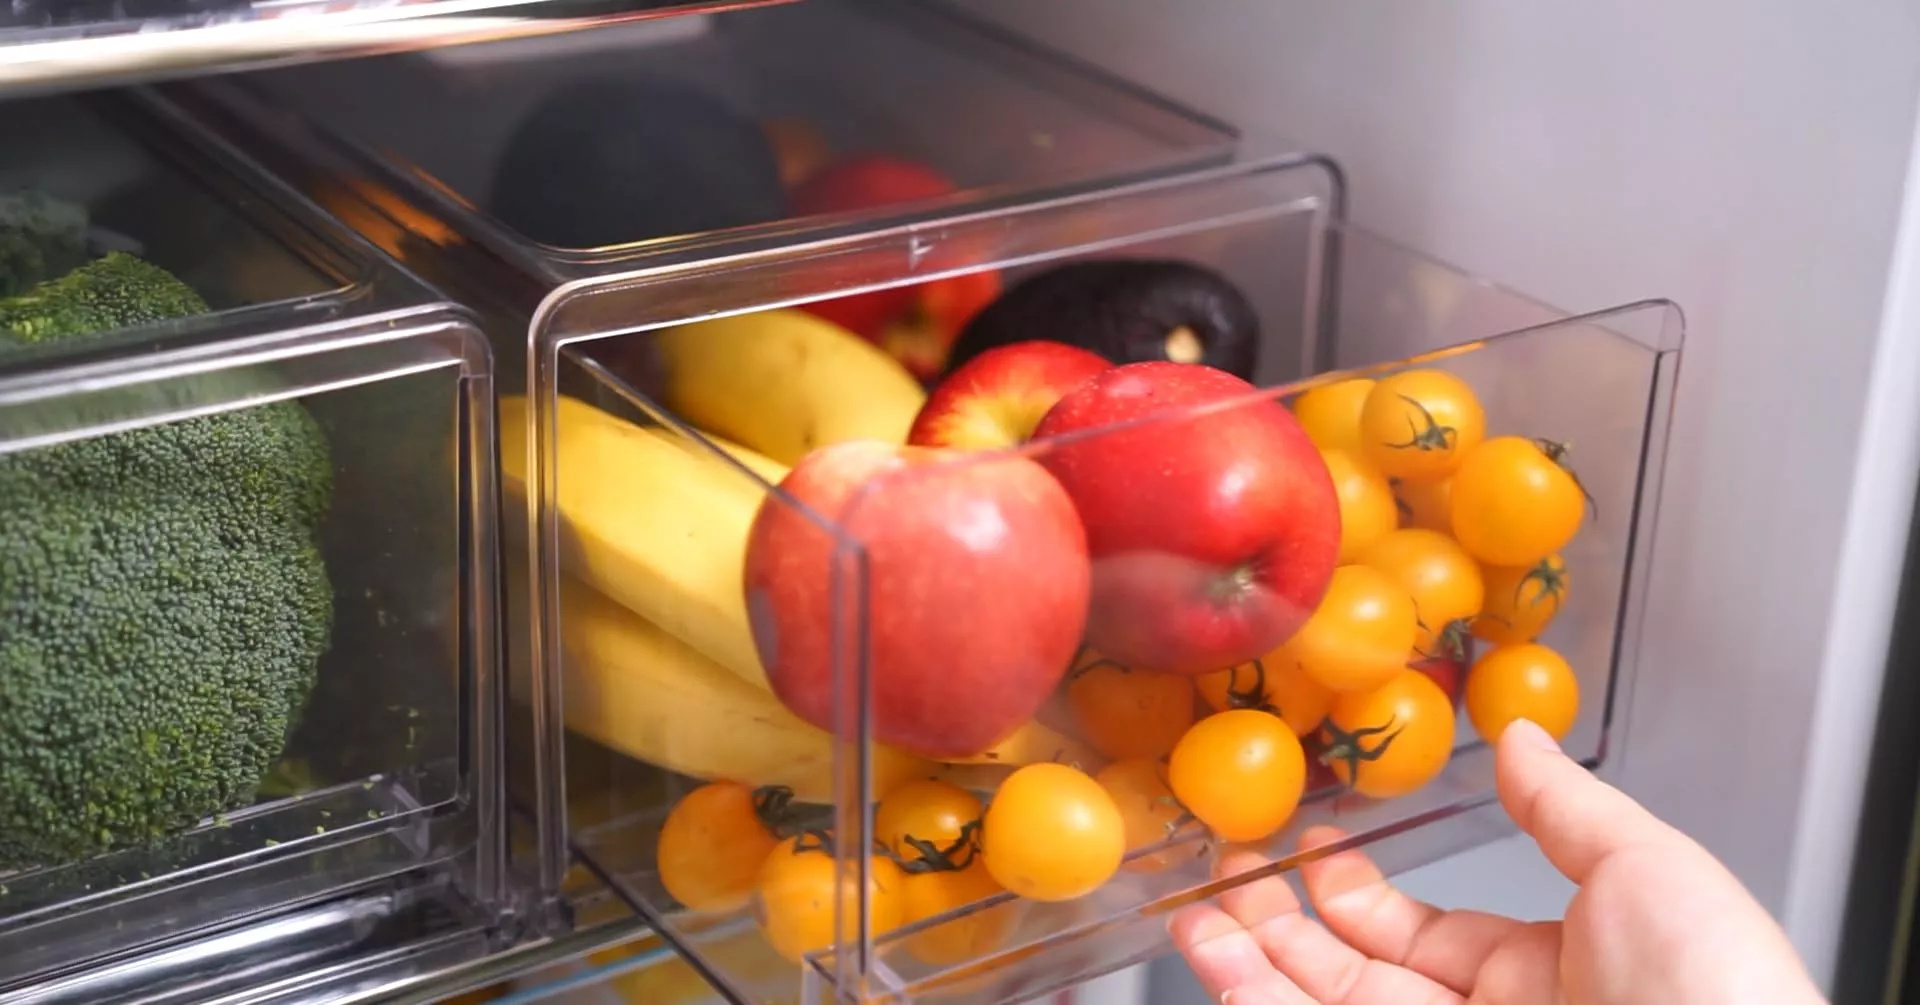 GREENTEC greentec refrigerator organizer drawer, stackable fridge